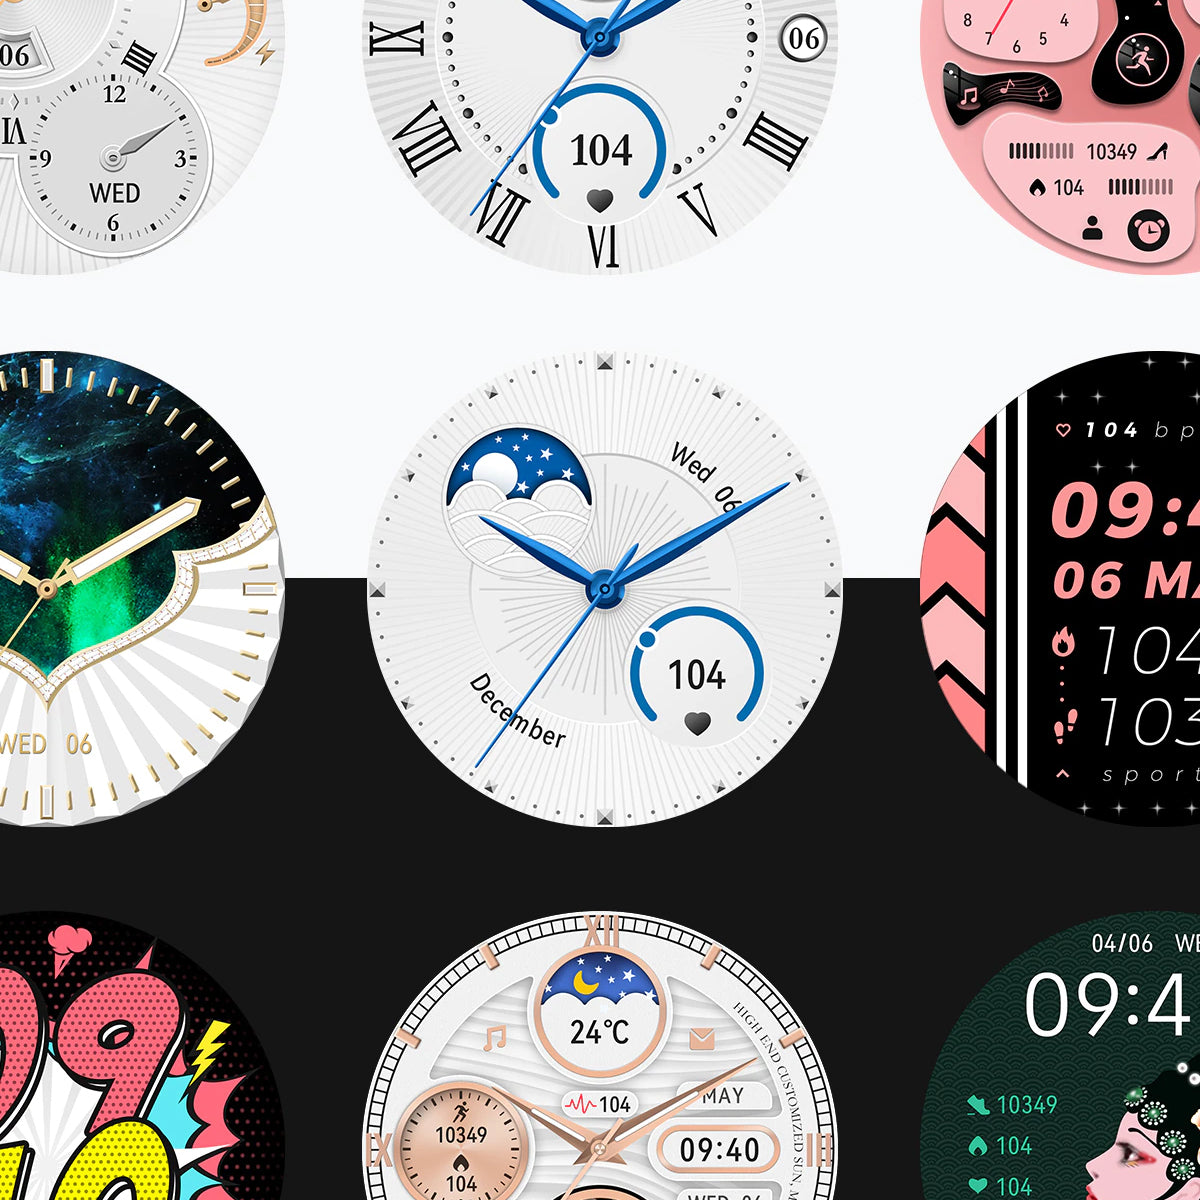 Smartwatch Reloj Inteligente Fralugio Hk43 De Lujo Para Dama